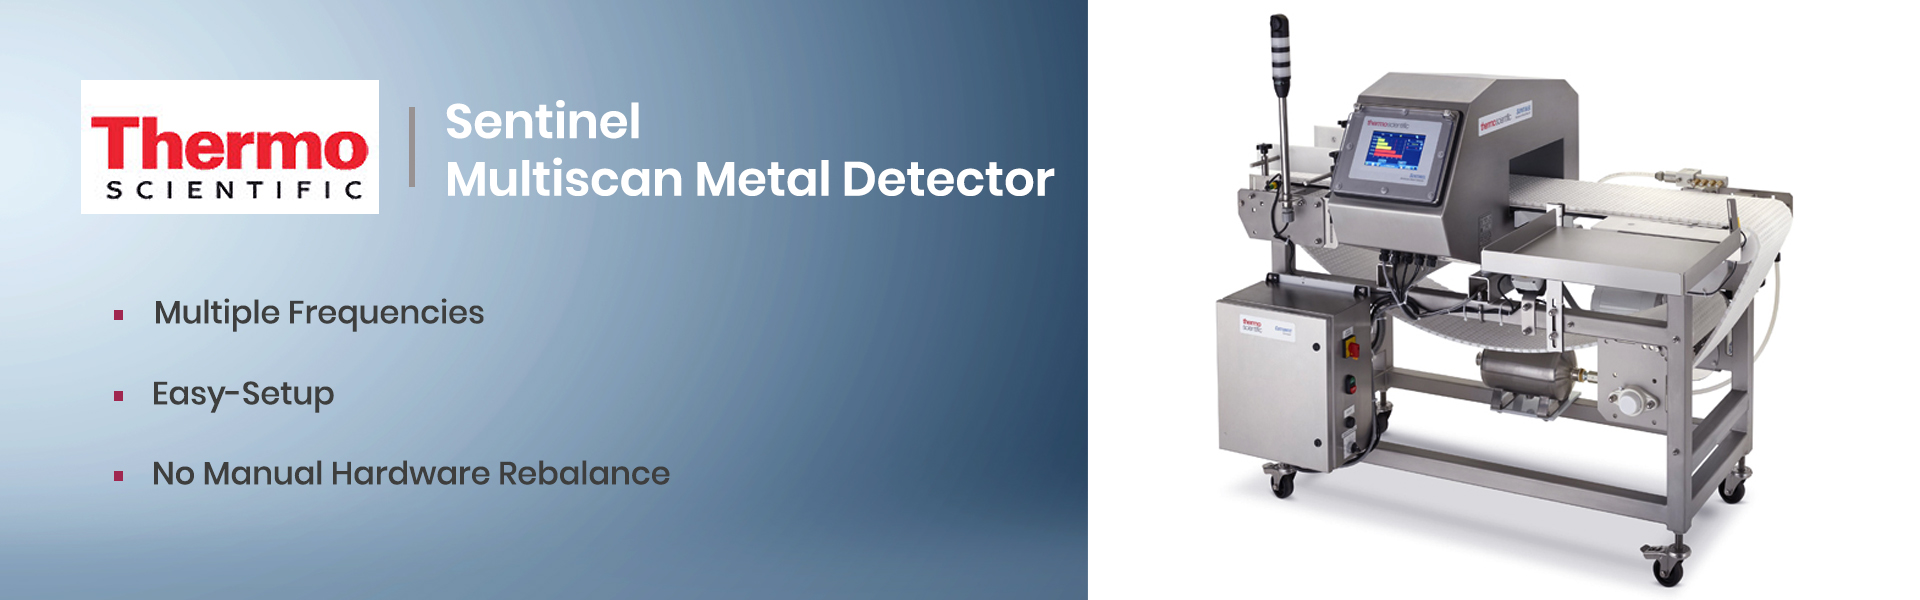 Sentinel Multiscan Metal Detector